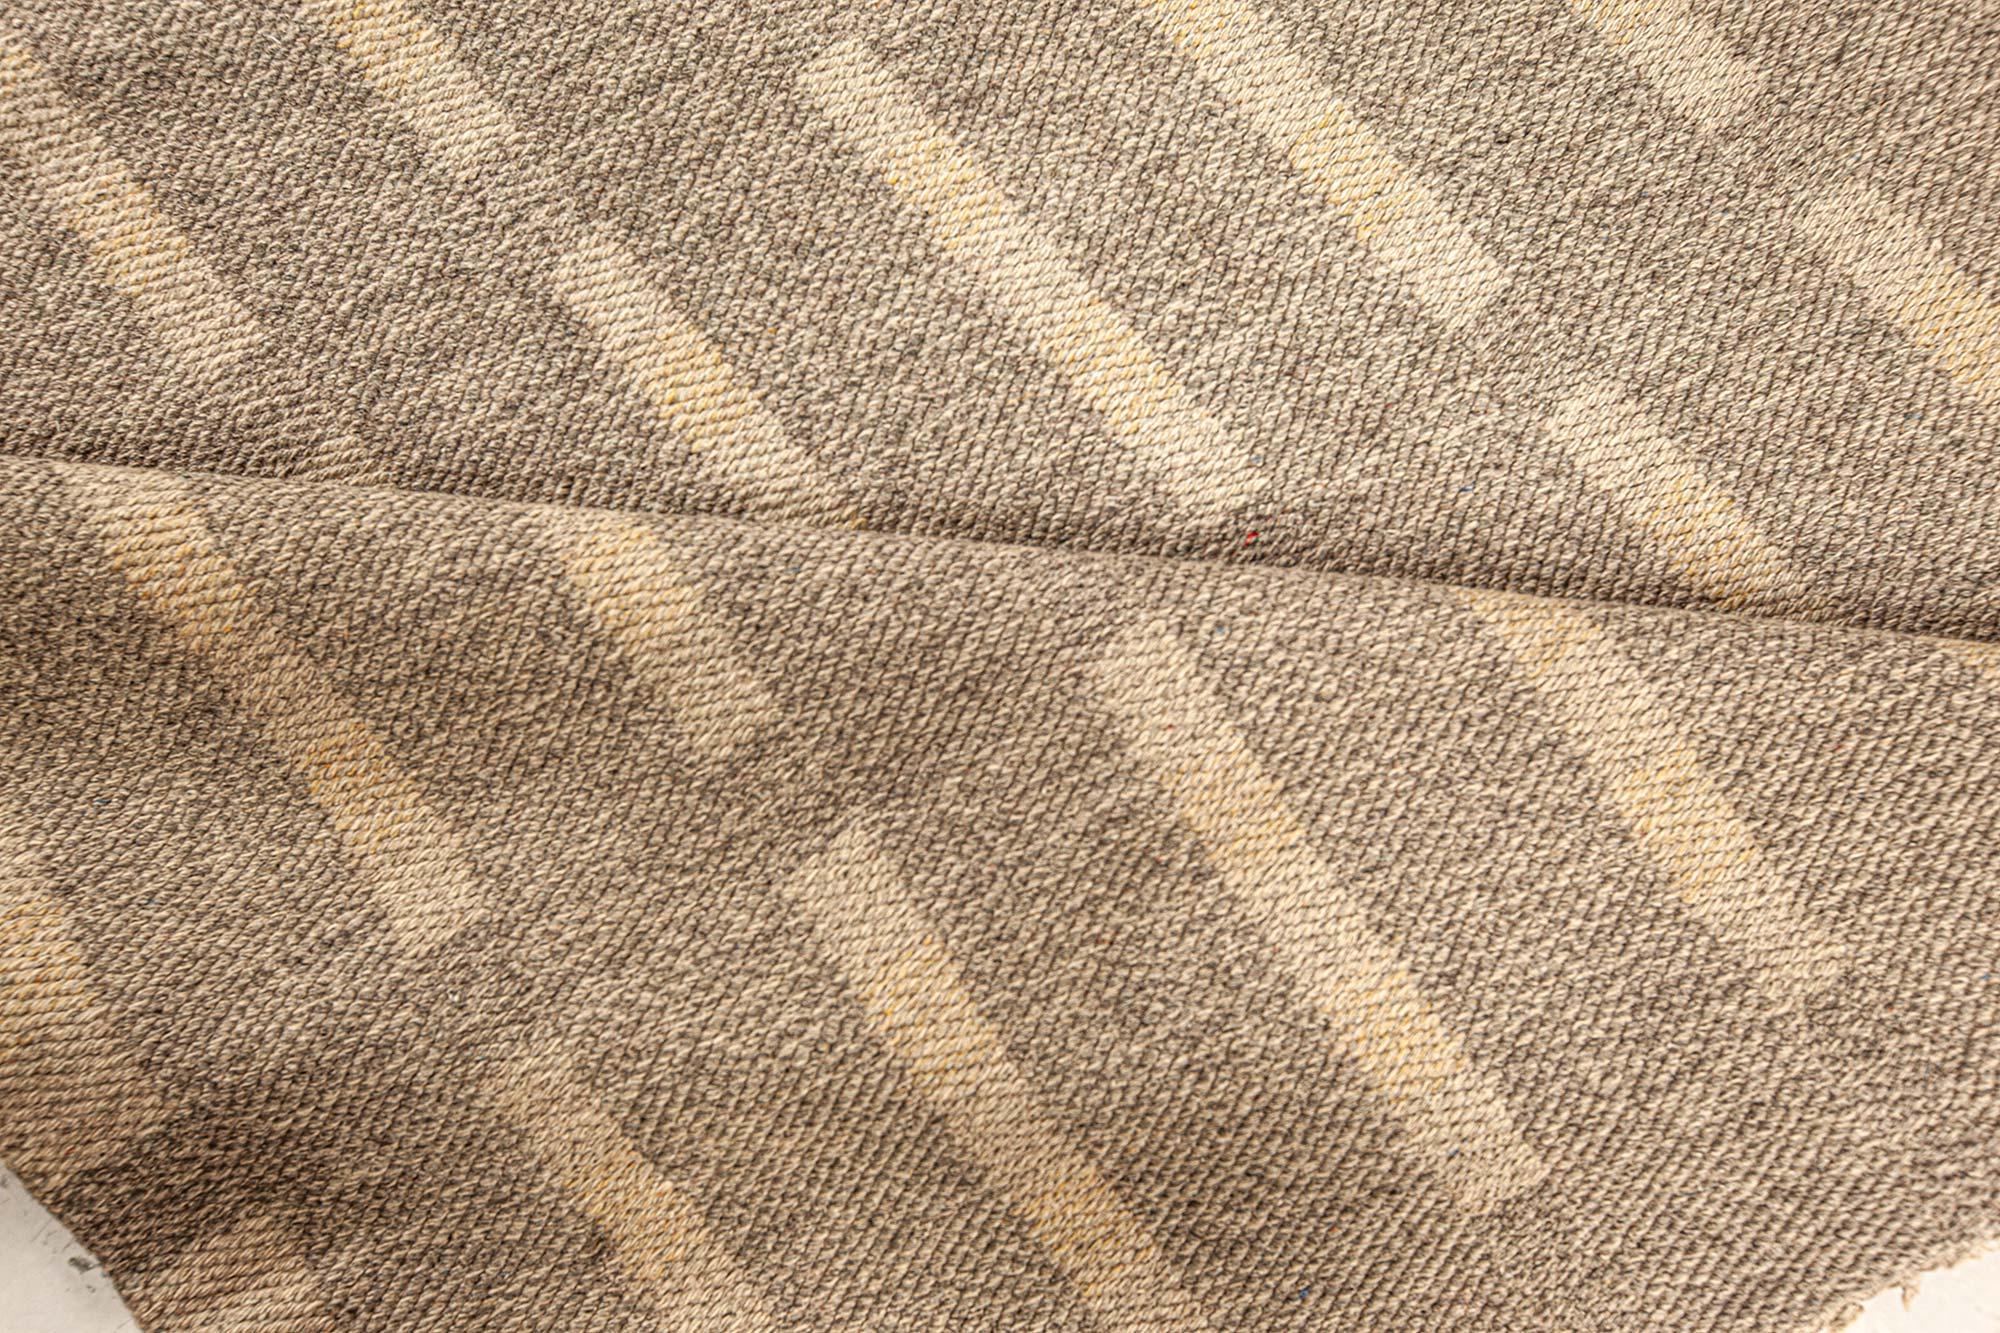 Swedish double sided flat weave area rug
Size: 5'10